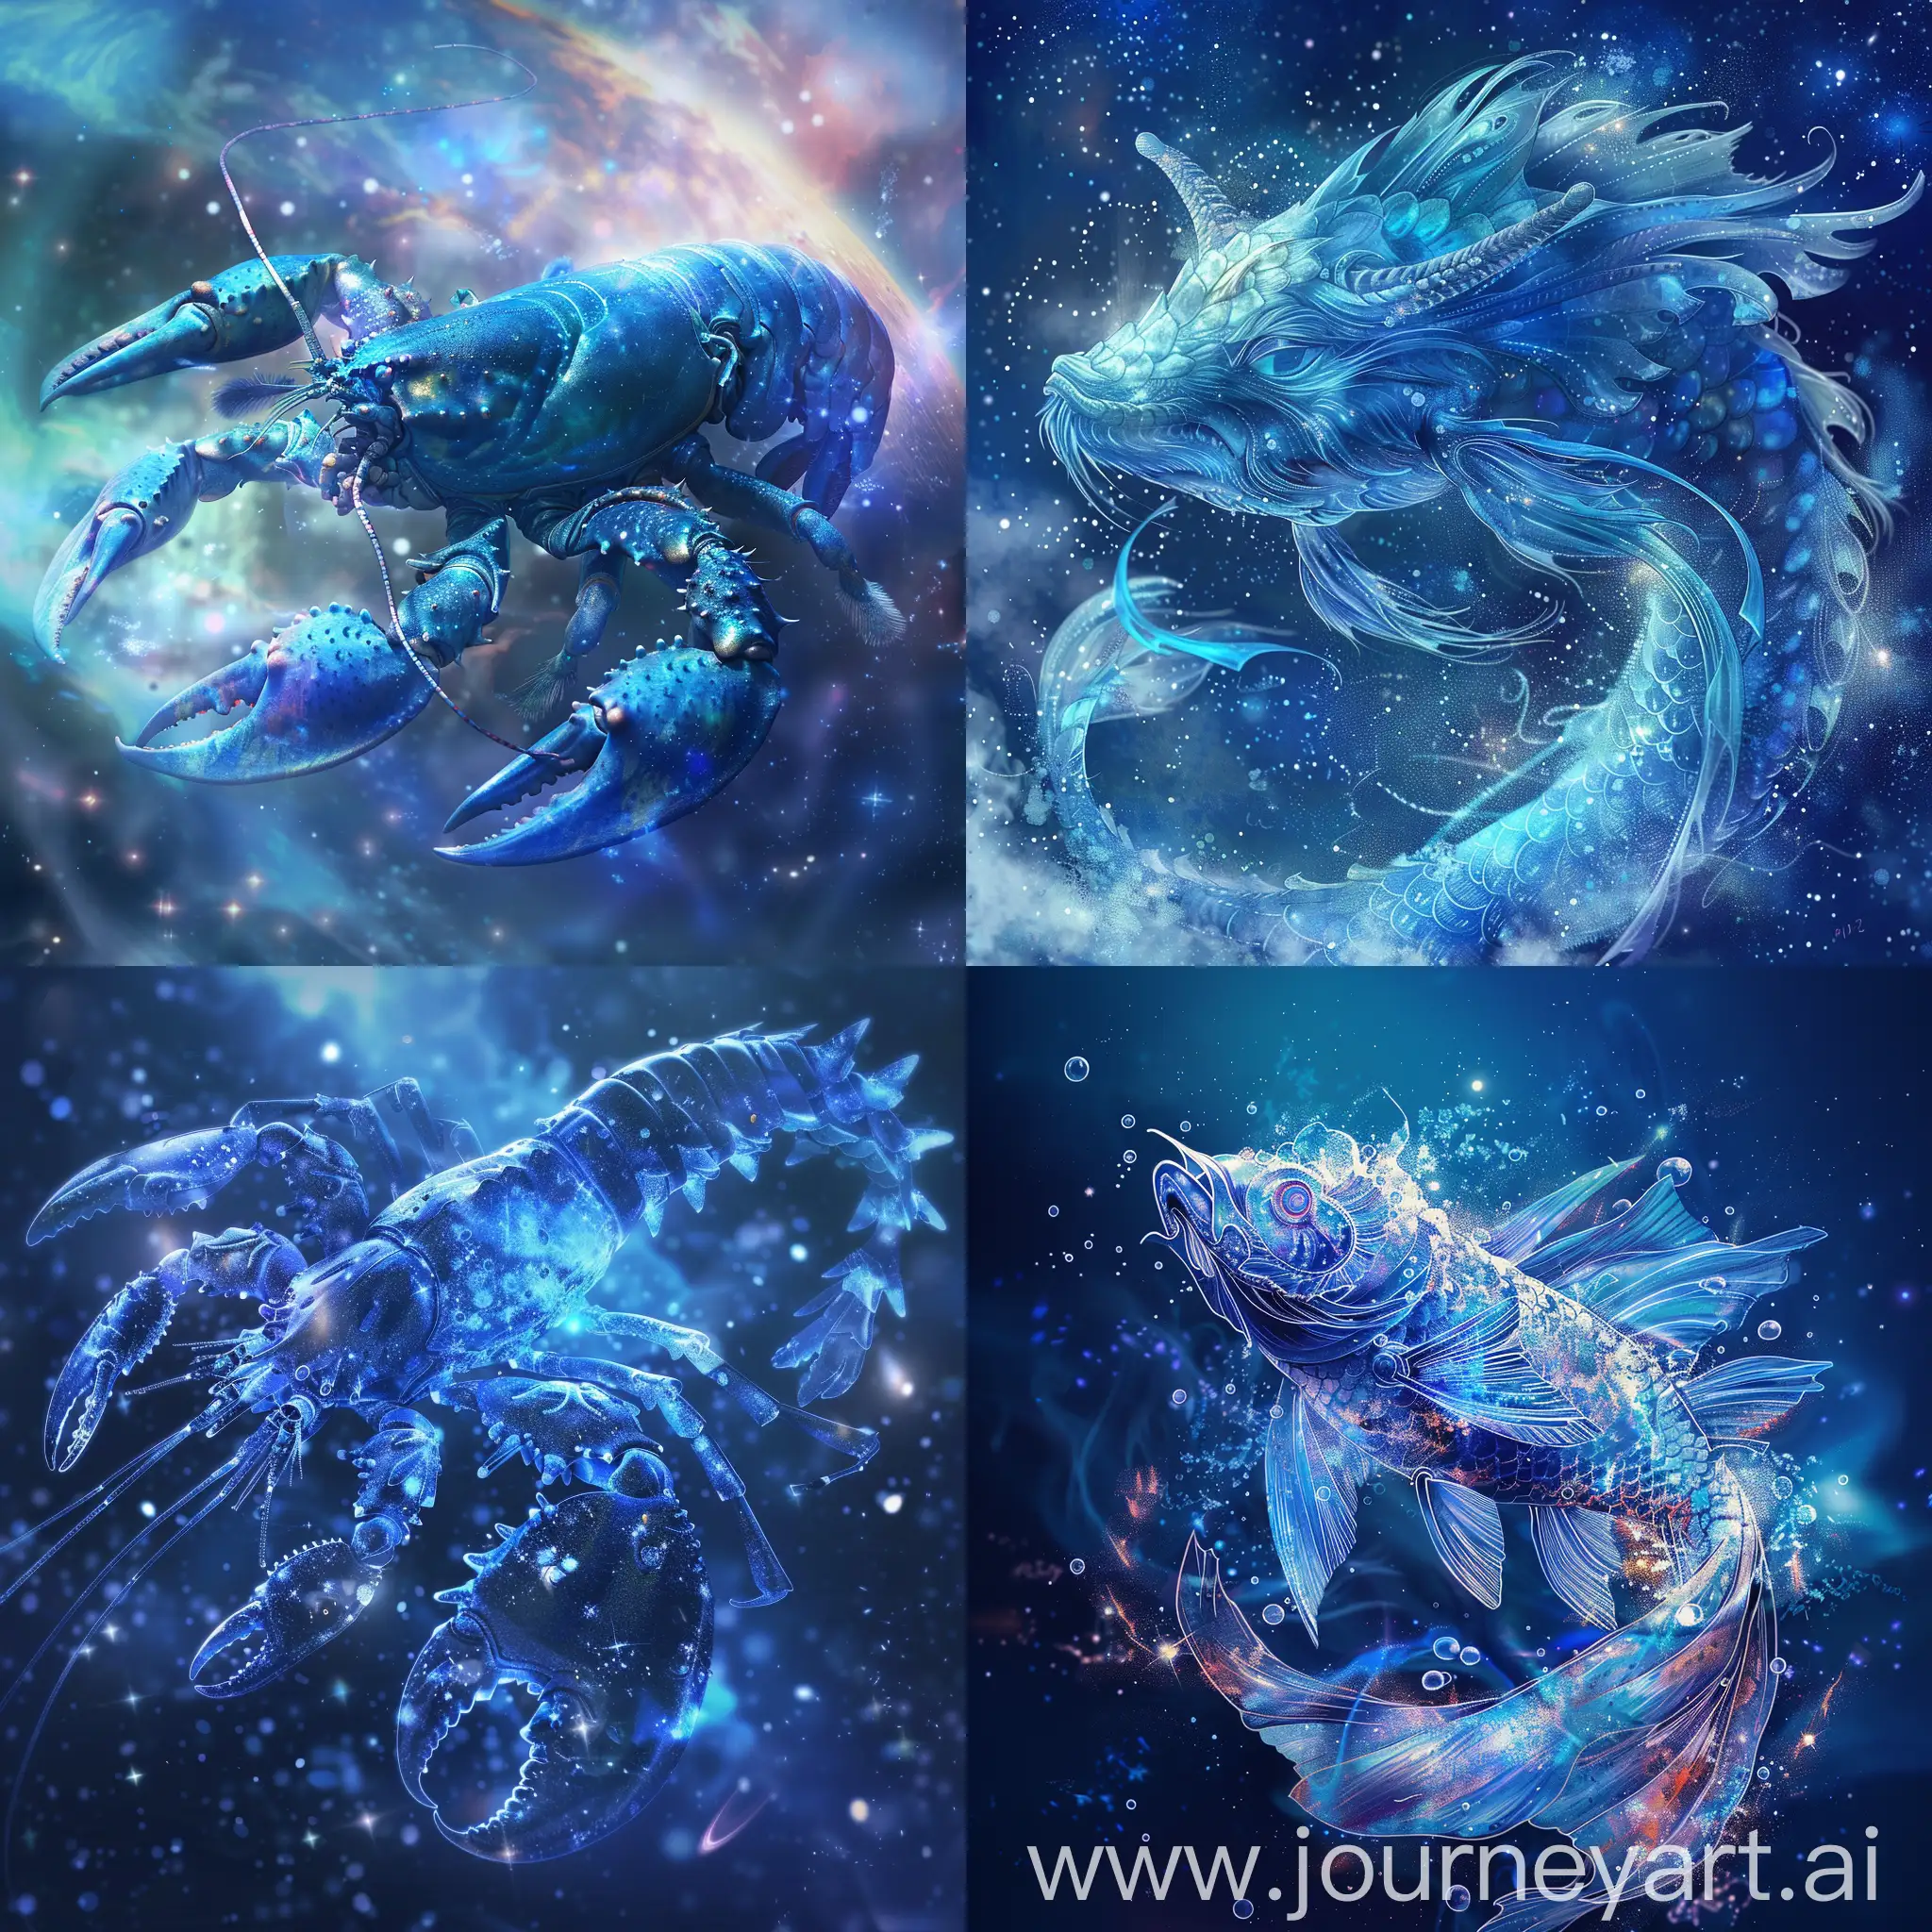 Aquarius as an epic space creature